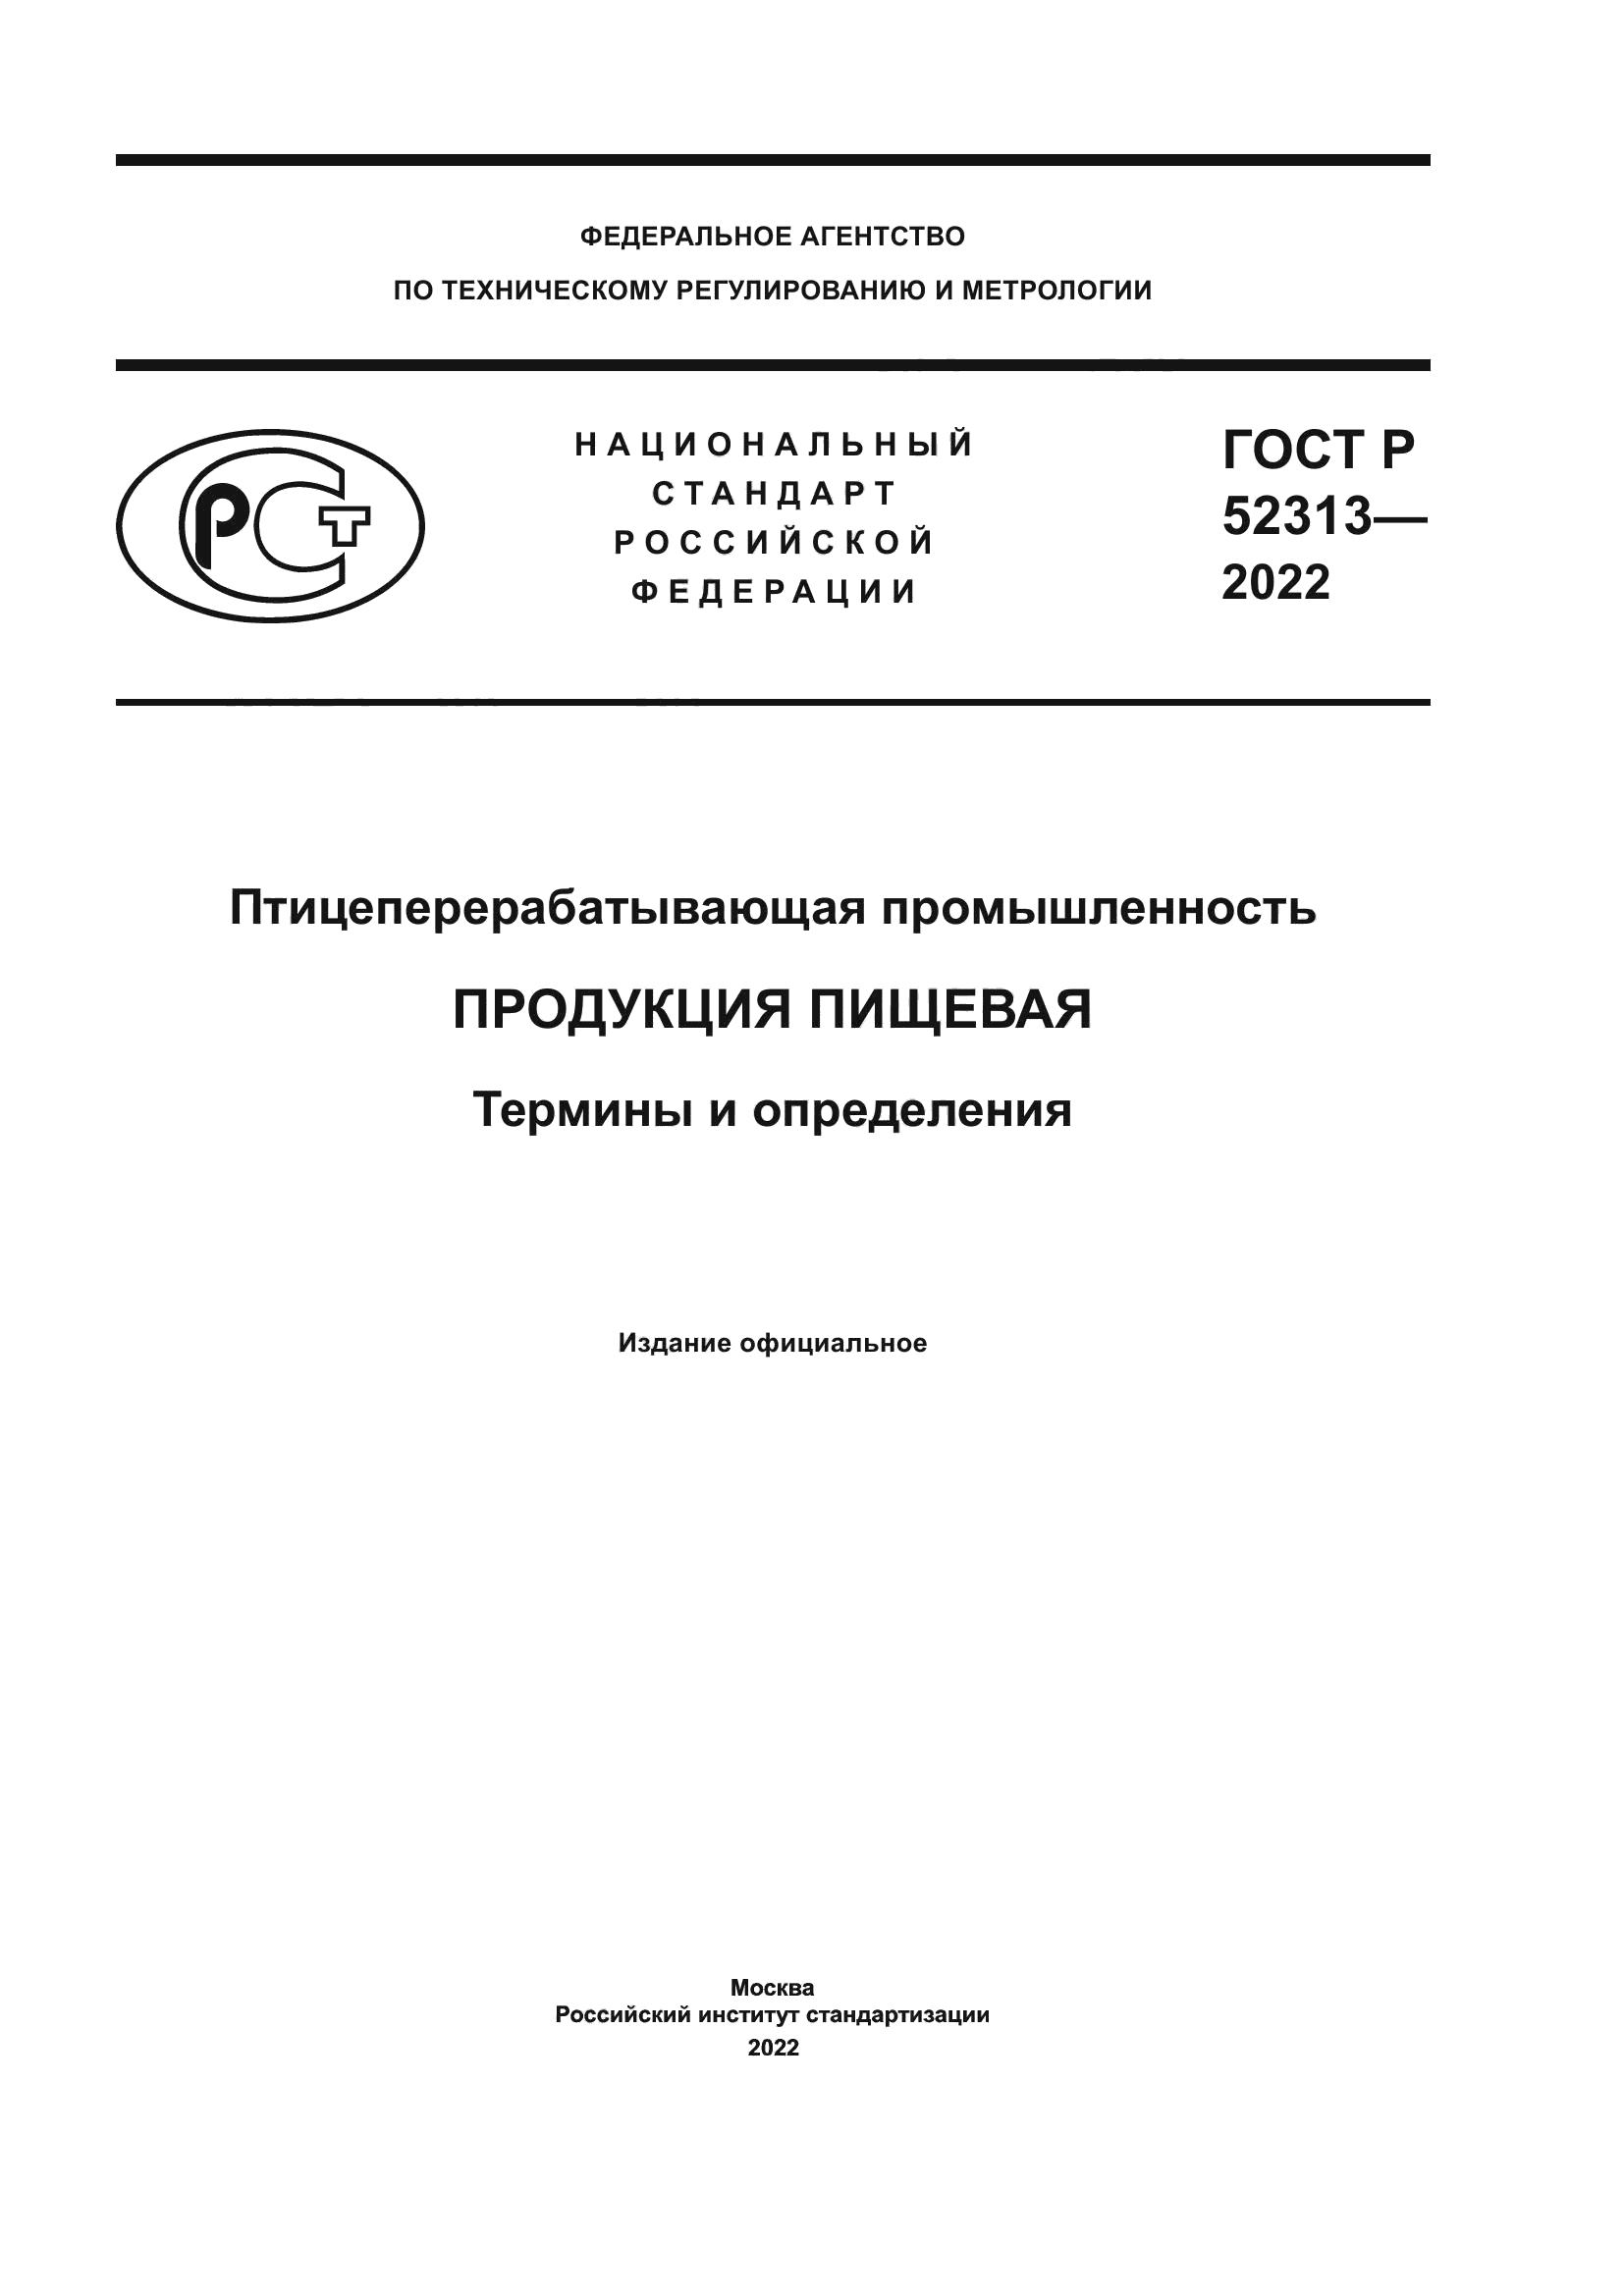 ГОСТ Р 52313-2022